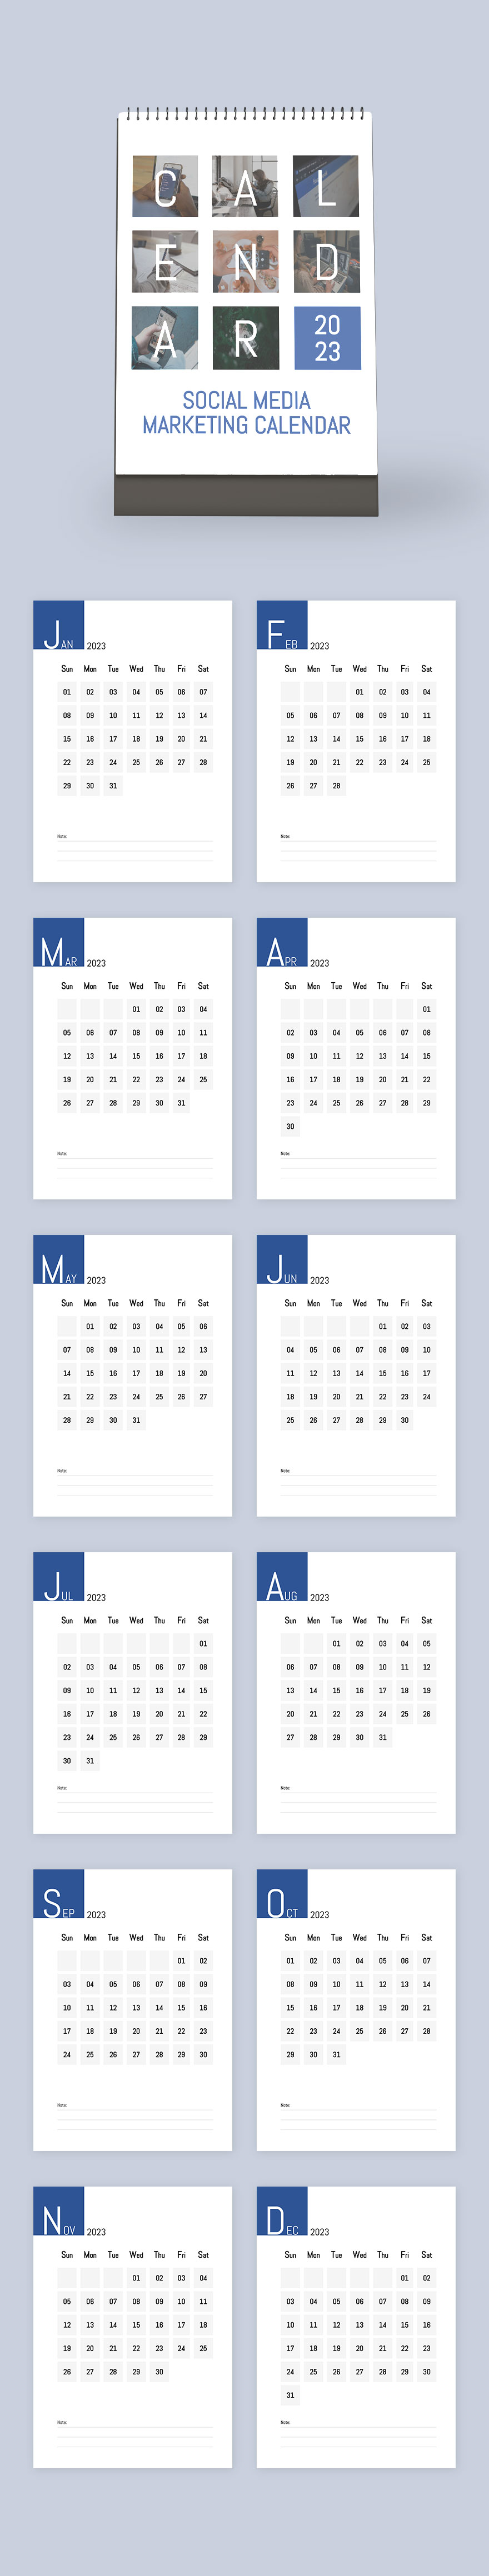 social-media-calendar-templates-documents-design-free-download